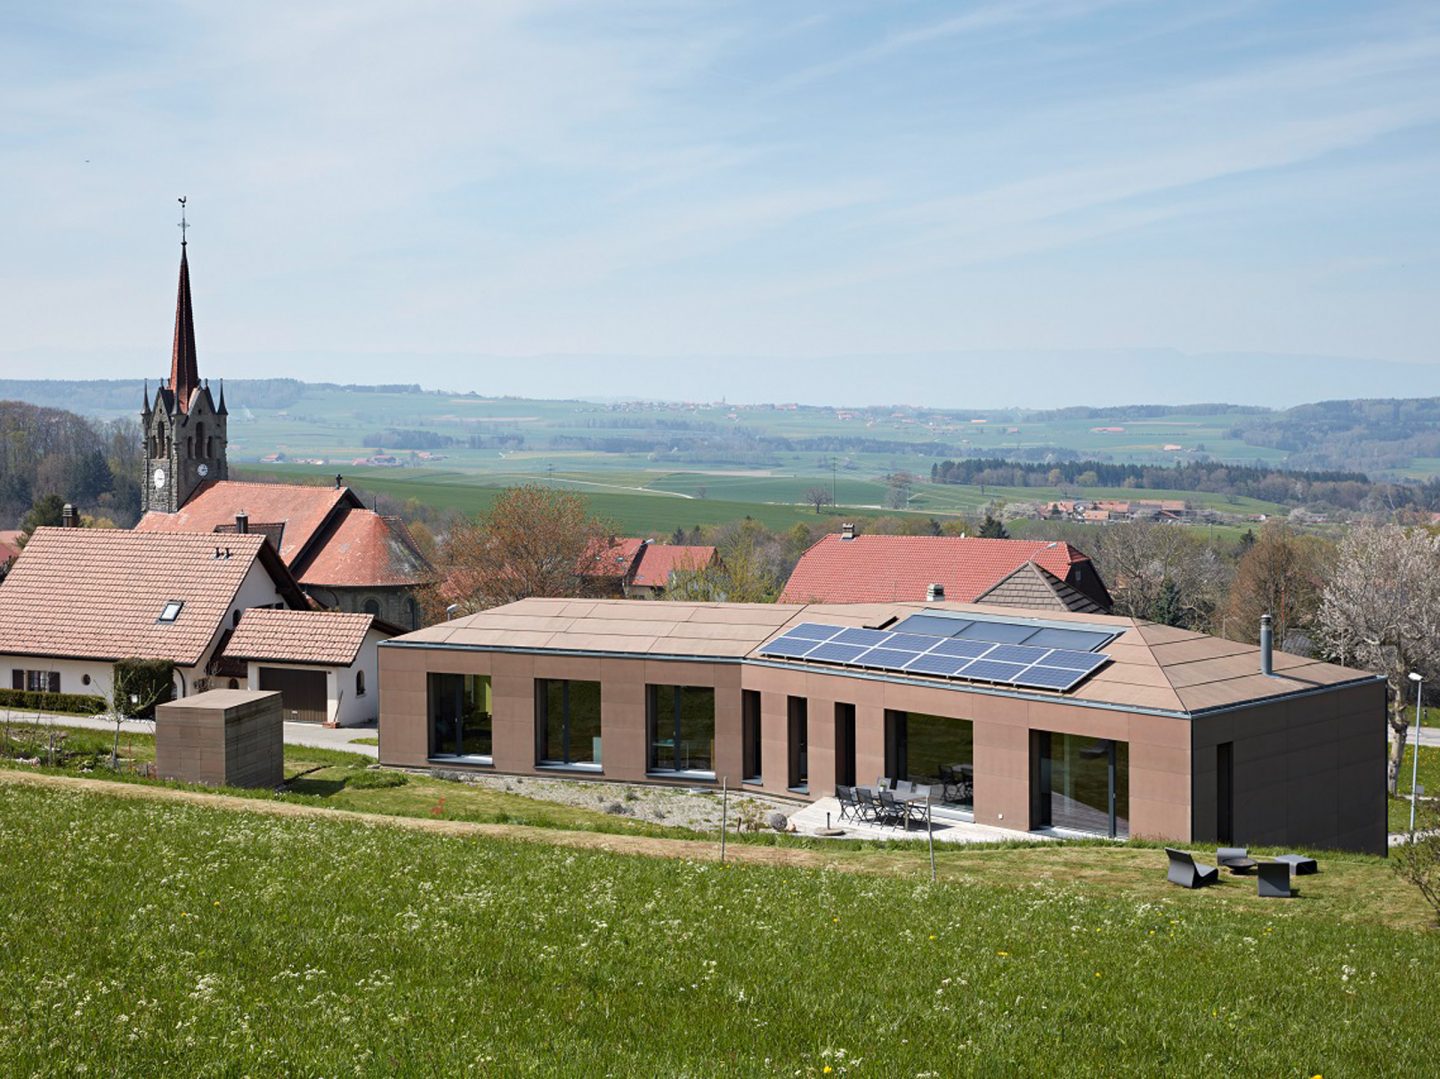 Casa a energia solare dintorni